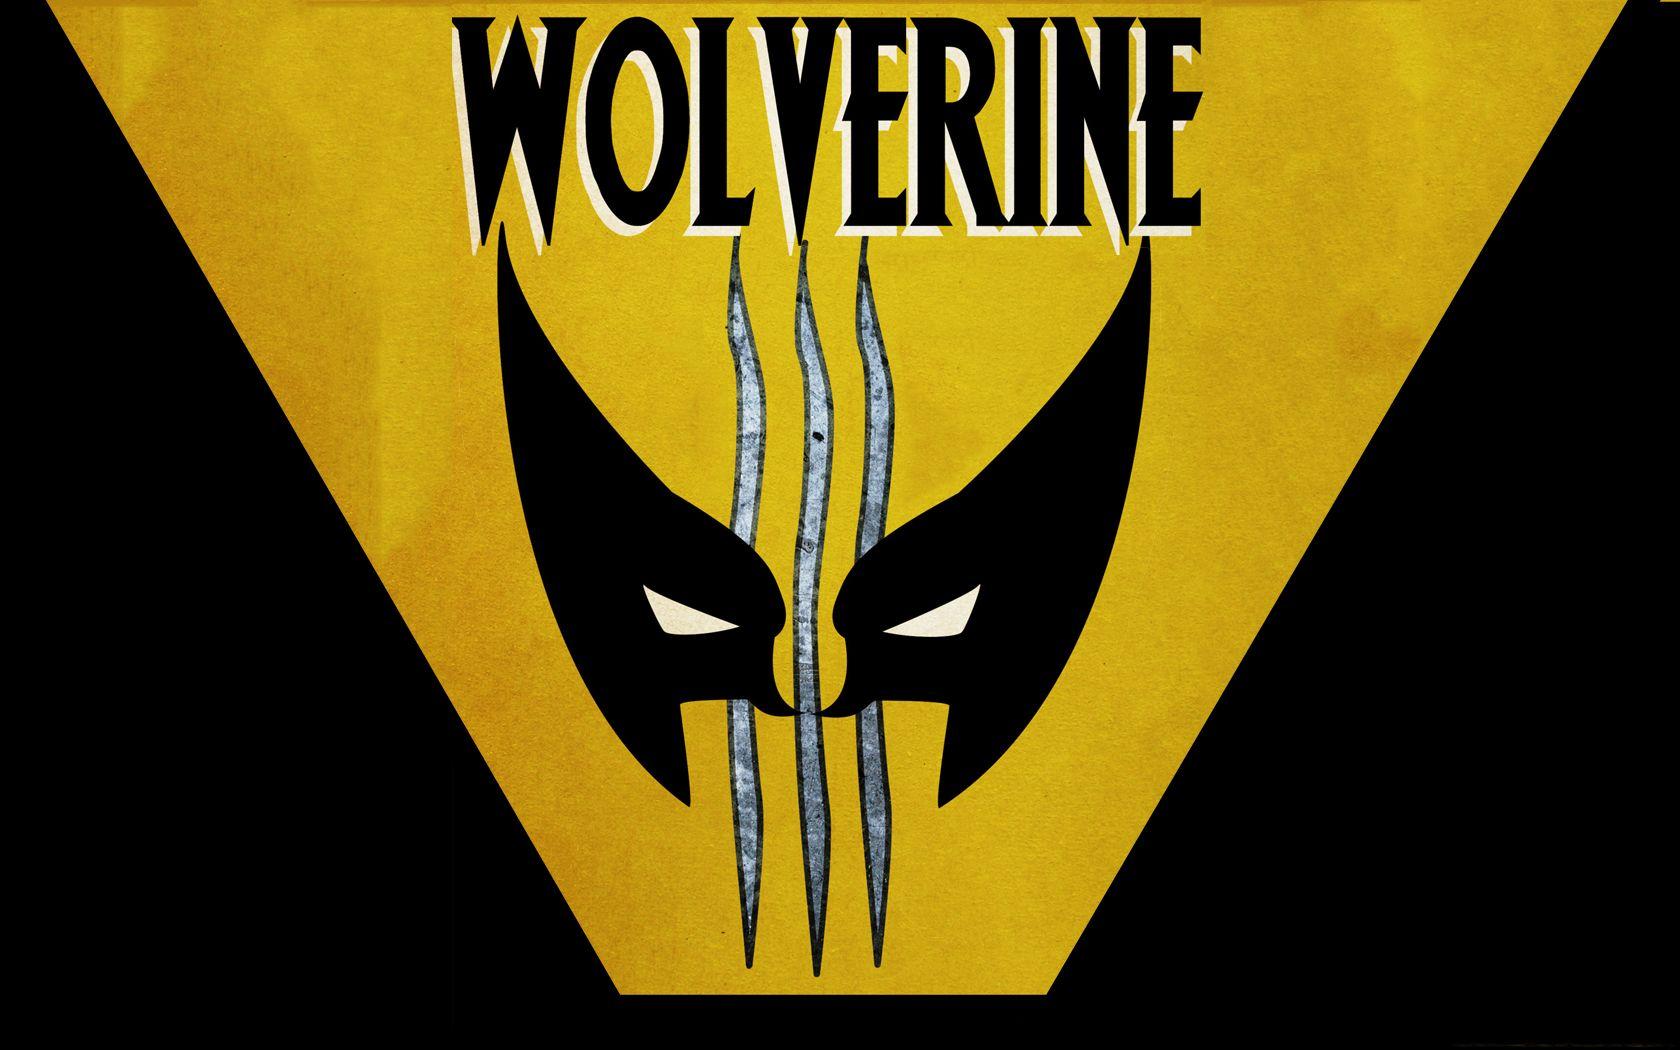 Marvel Wolverine Logo - Wolverine Wallpaper and Background Imagex1050